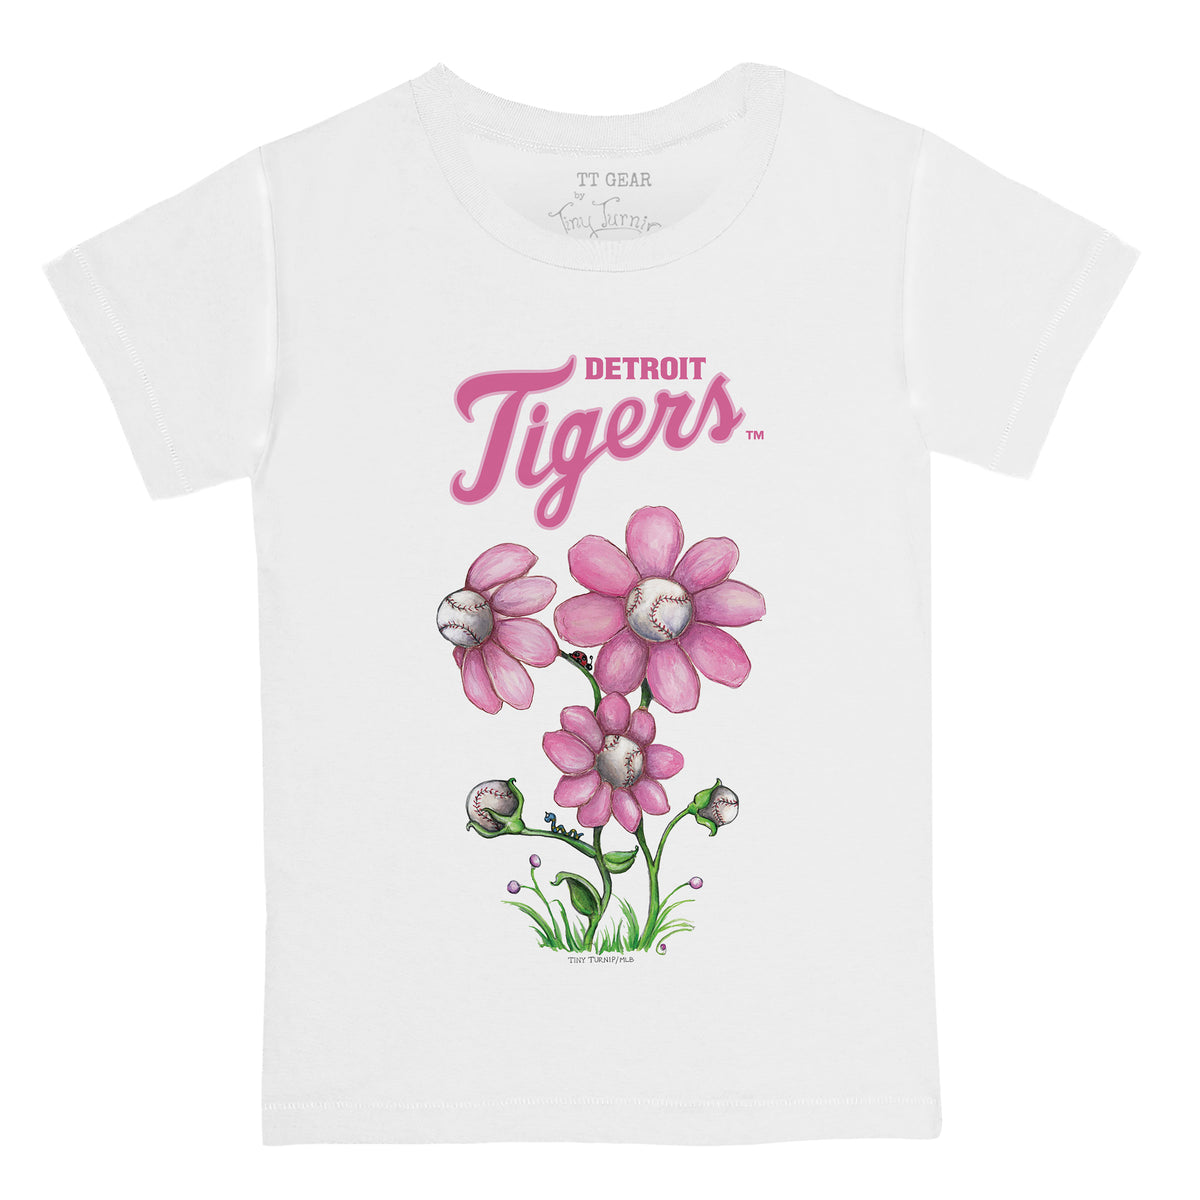 Tiny Turnip Detroit Tigers State Outline Tee Shirt Women's 3XL / White